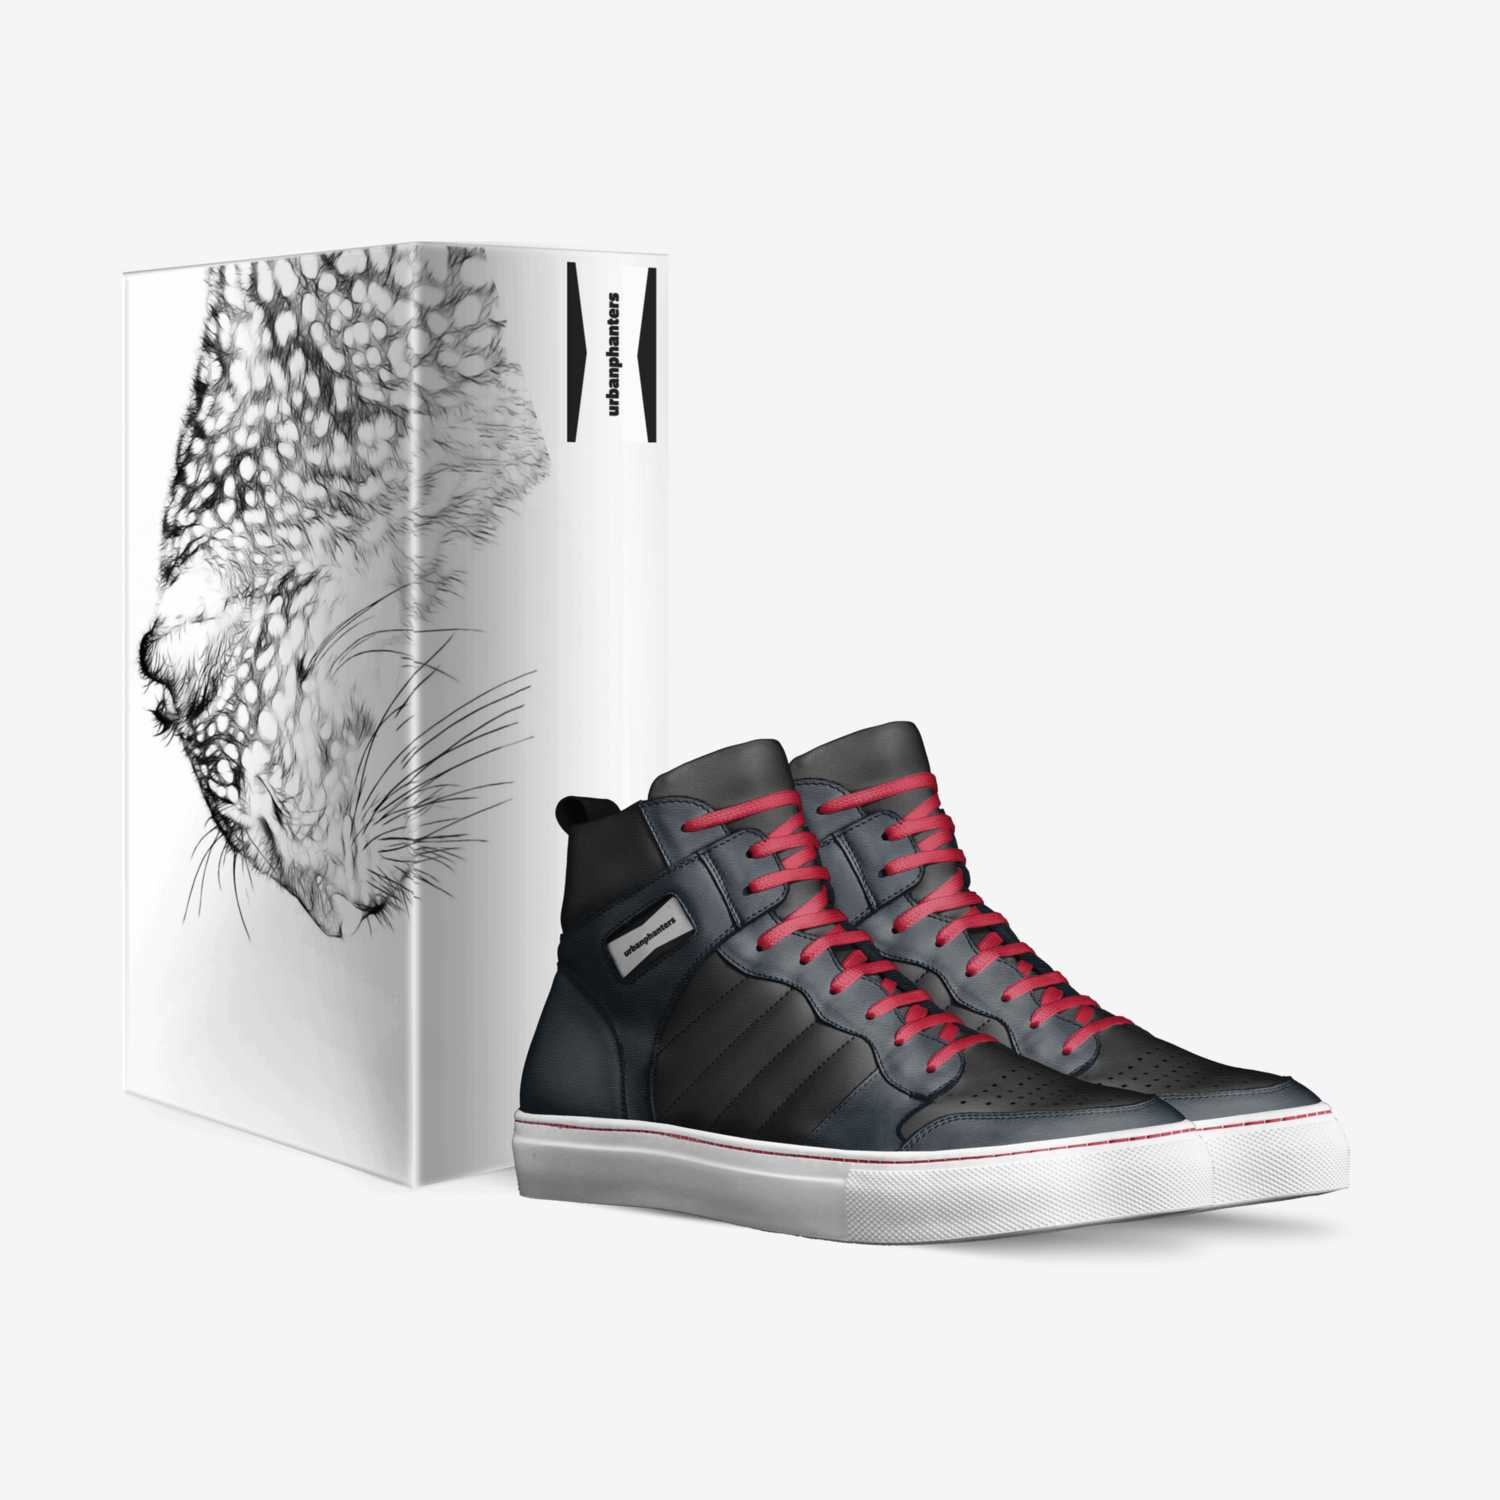 urbanphanters custom made in Italy shoes by Damir Čizmić | Box view